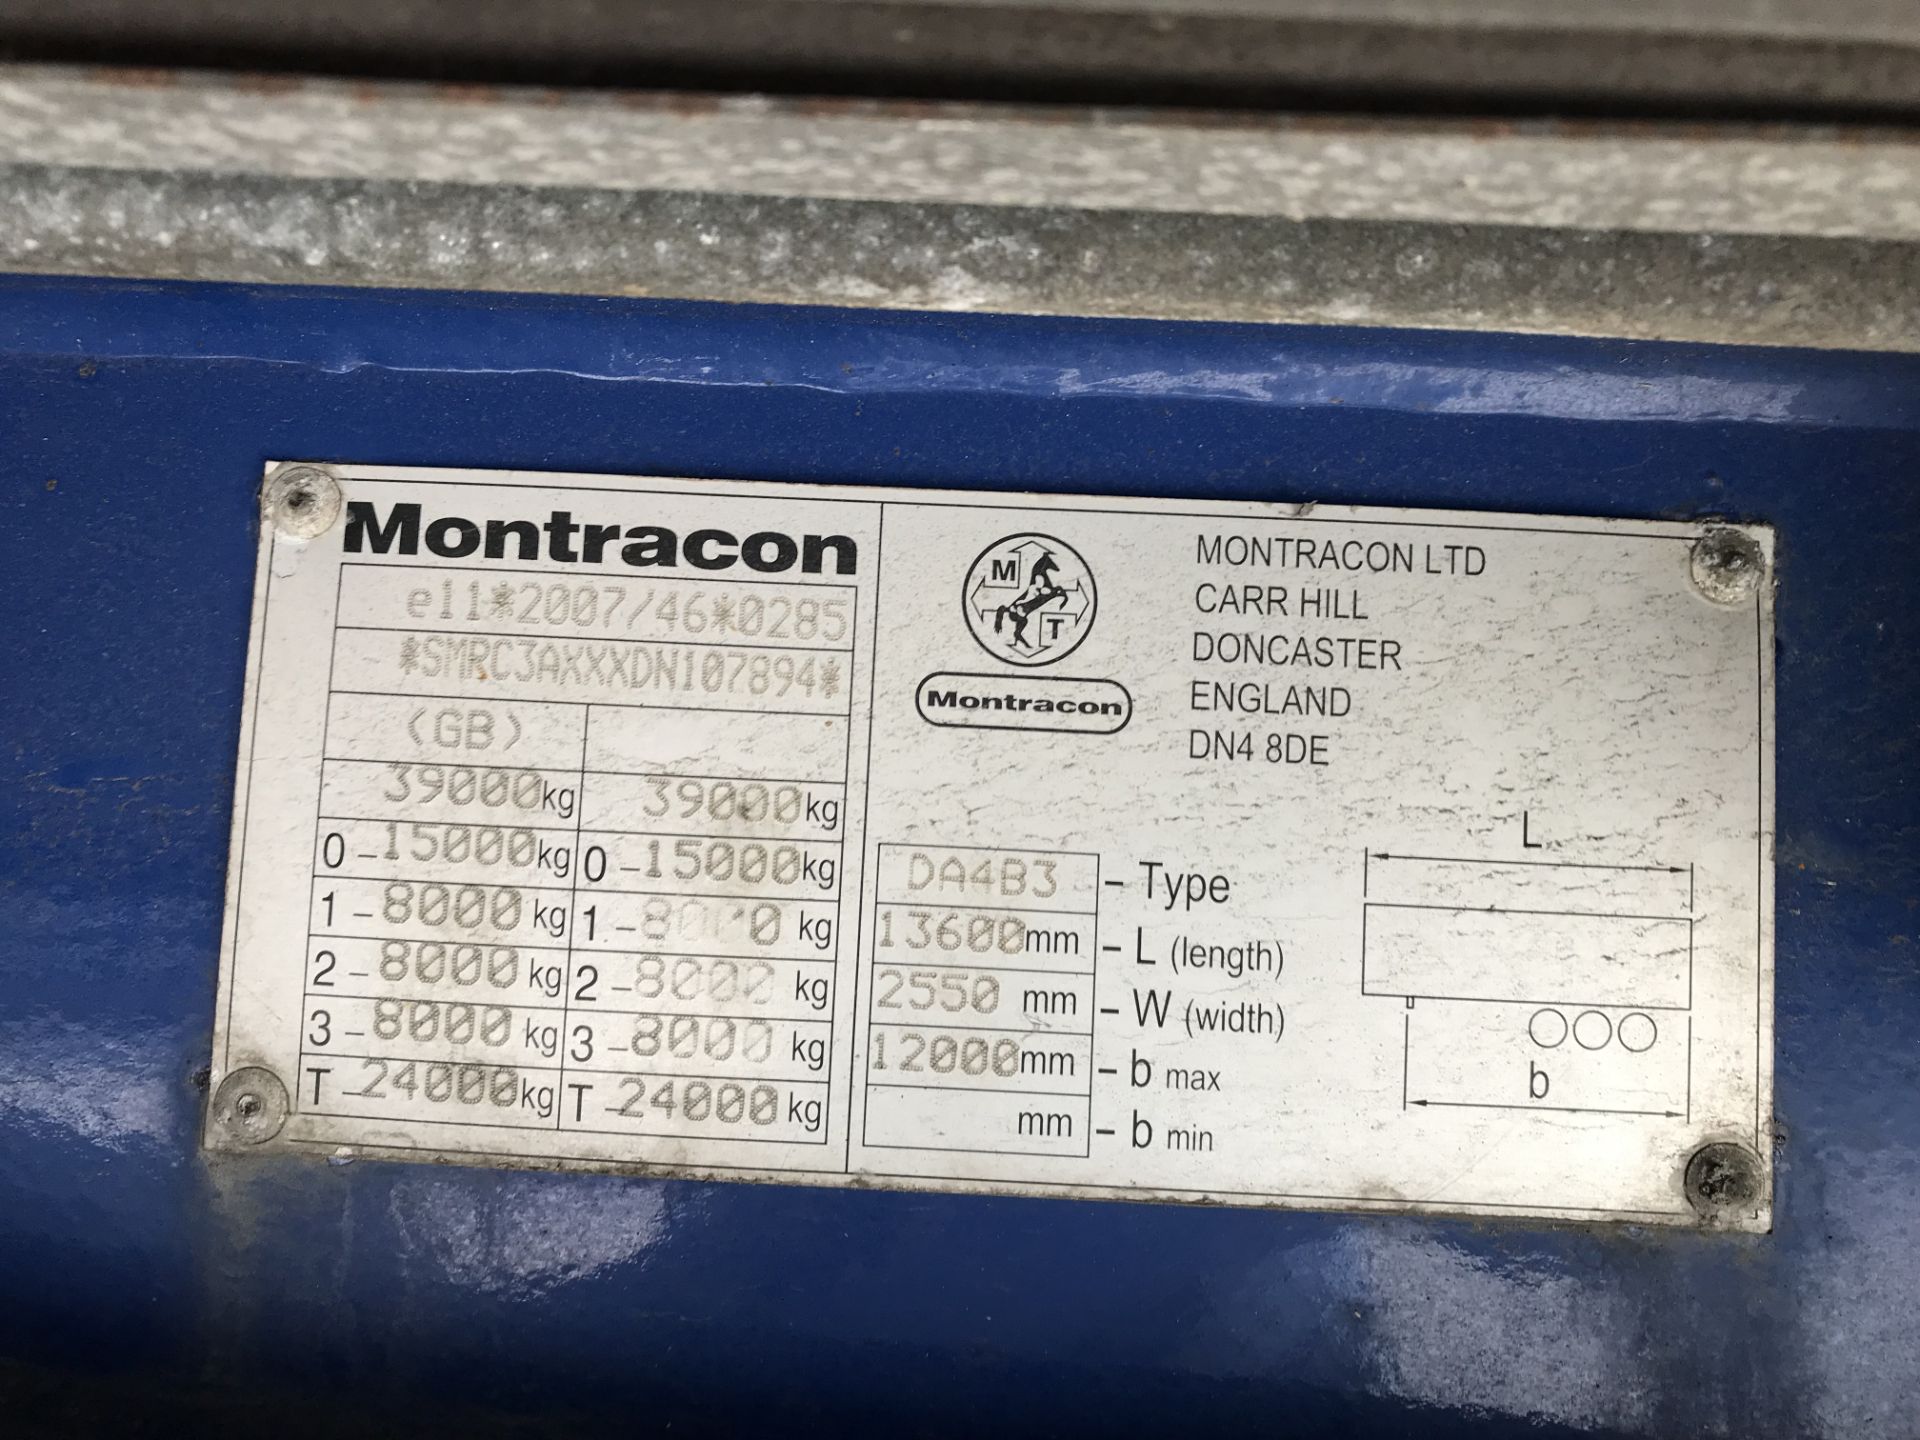 Montracon 13.6m Tri-Axle Curtainside Single Deck Semi-Trailer, chassis no. SMRC3AXXXDN107894, ID no. - Image 6 of 6